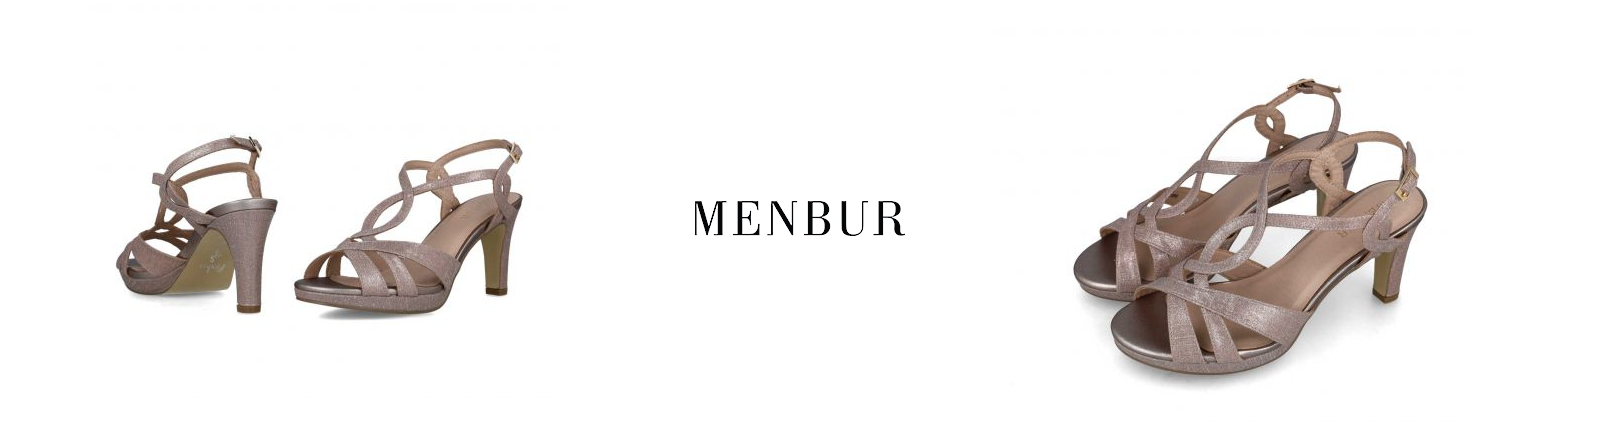 Menbur Markenschuhe online kaufen im GISY Schuhe Shop